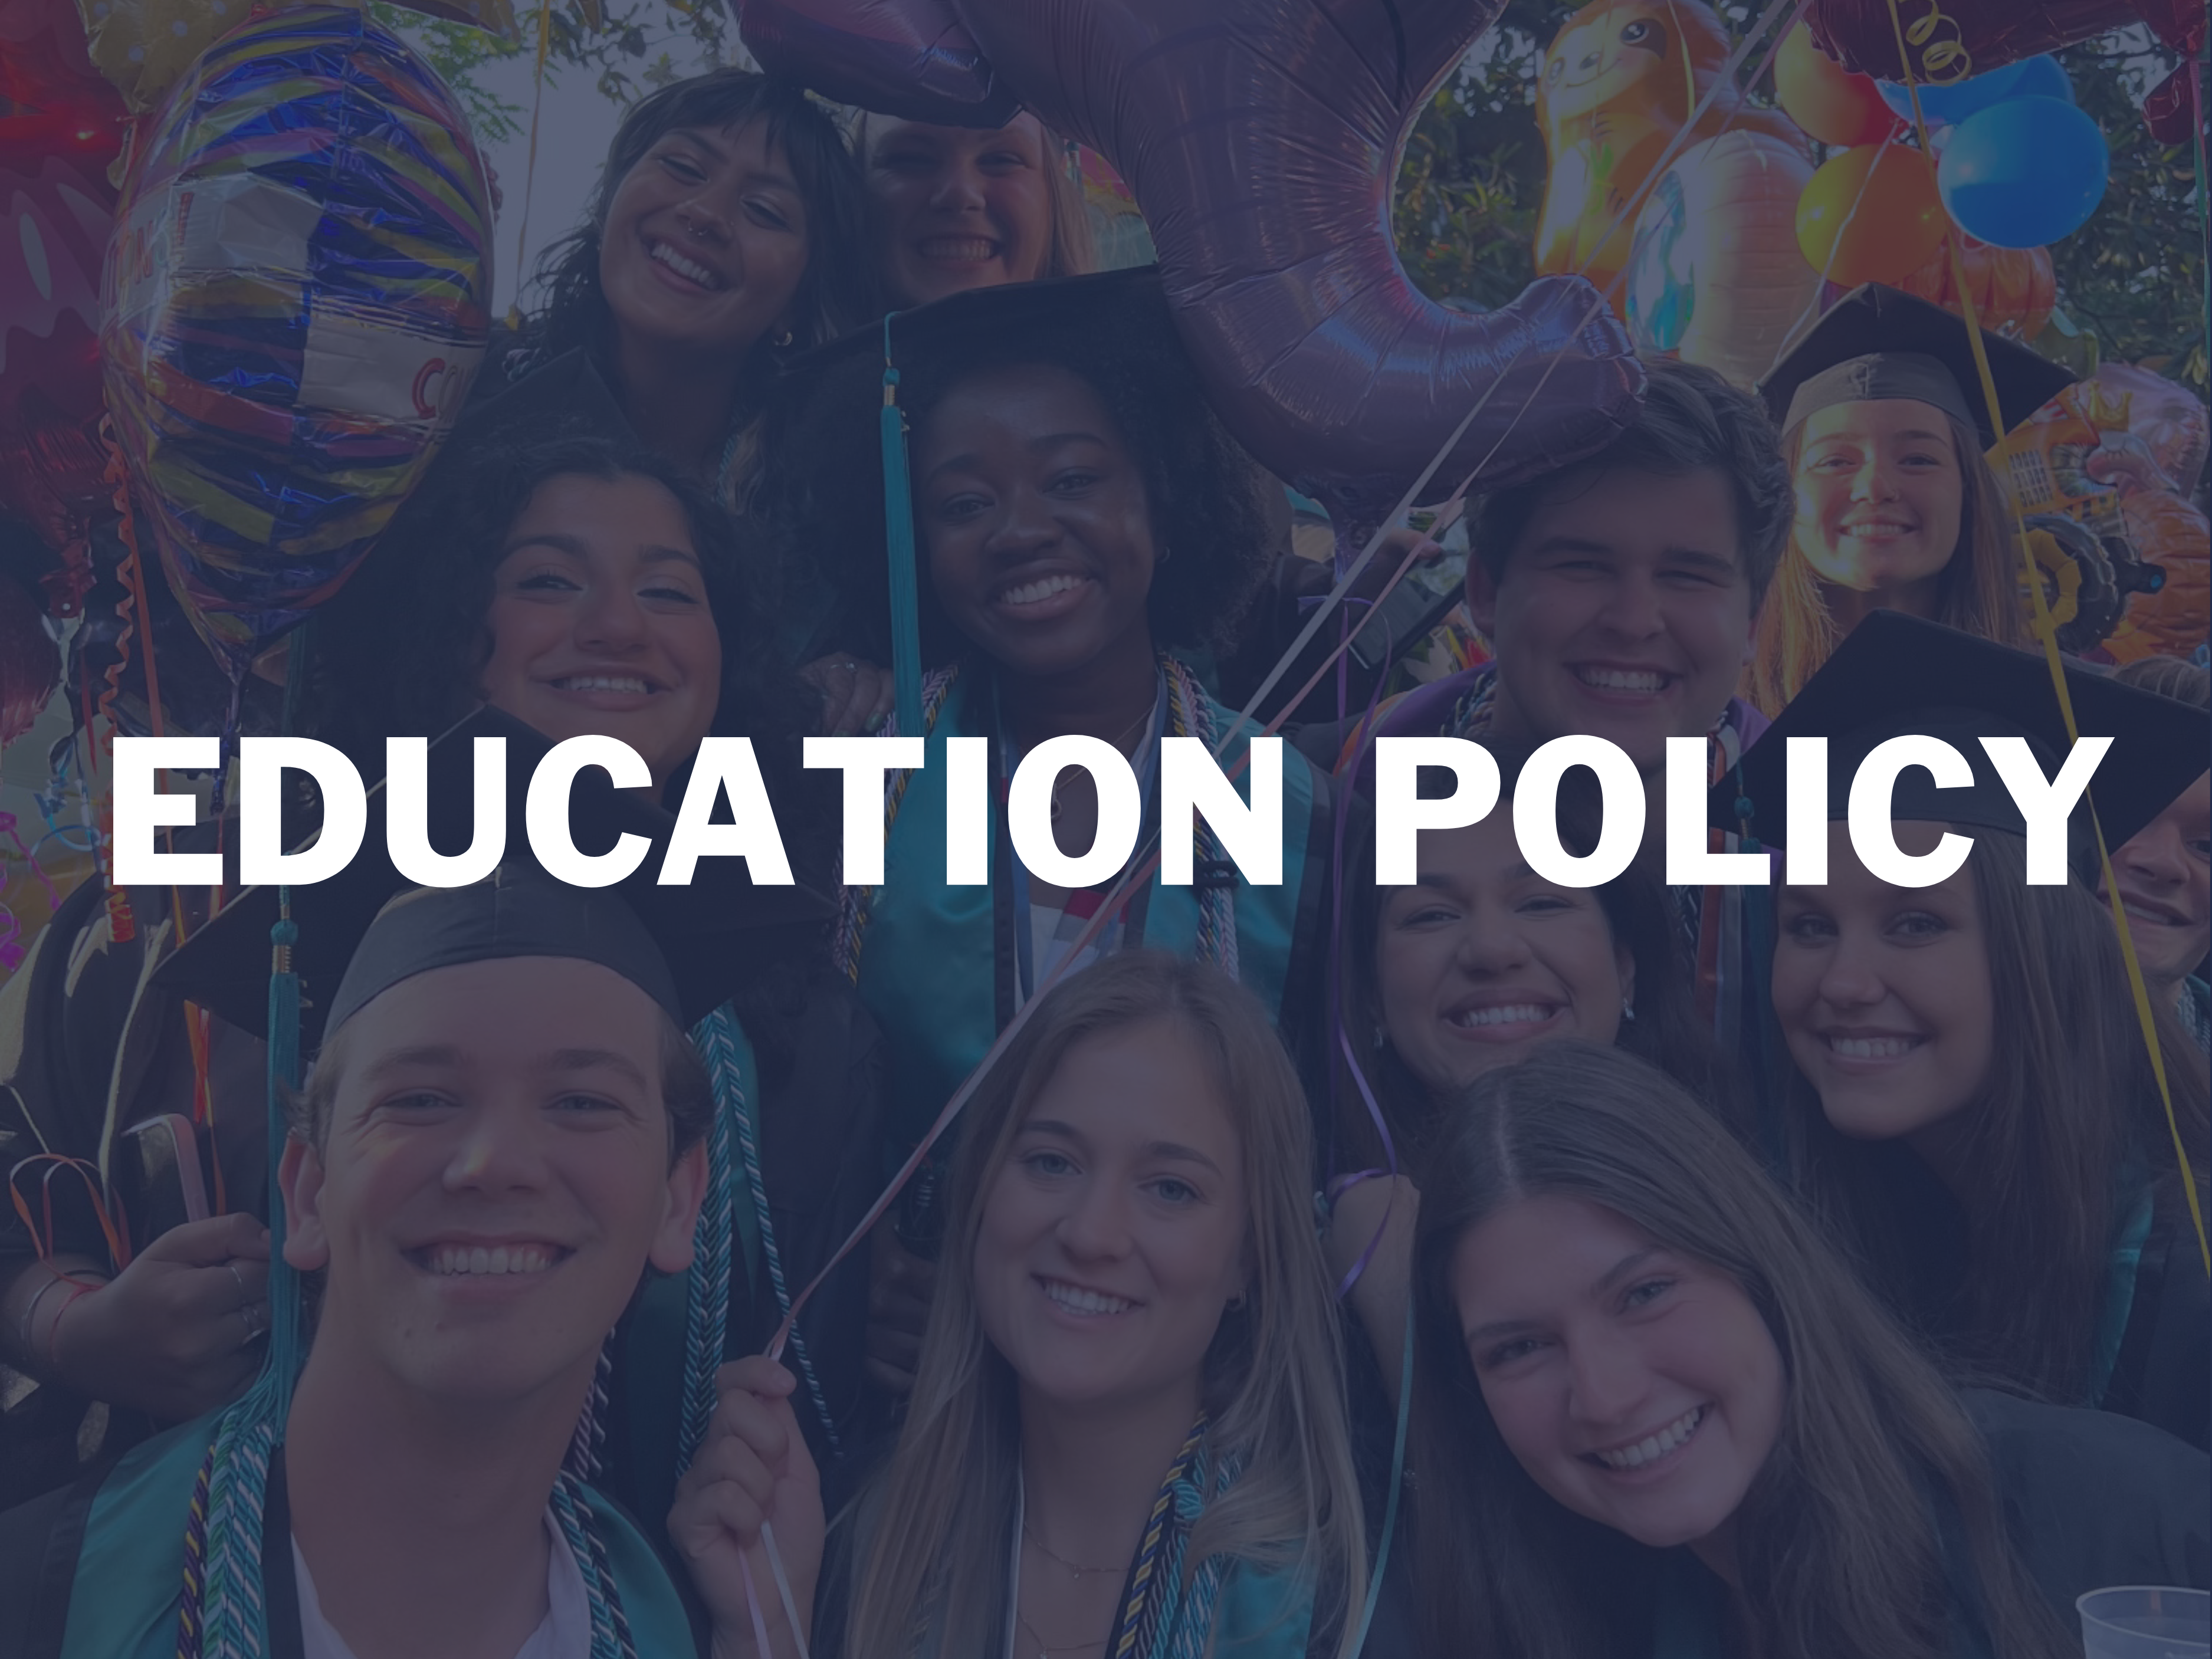 UVA Batten School of Leadership and Public Policy graduates